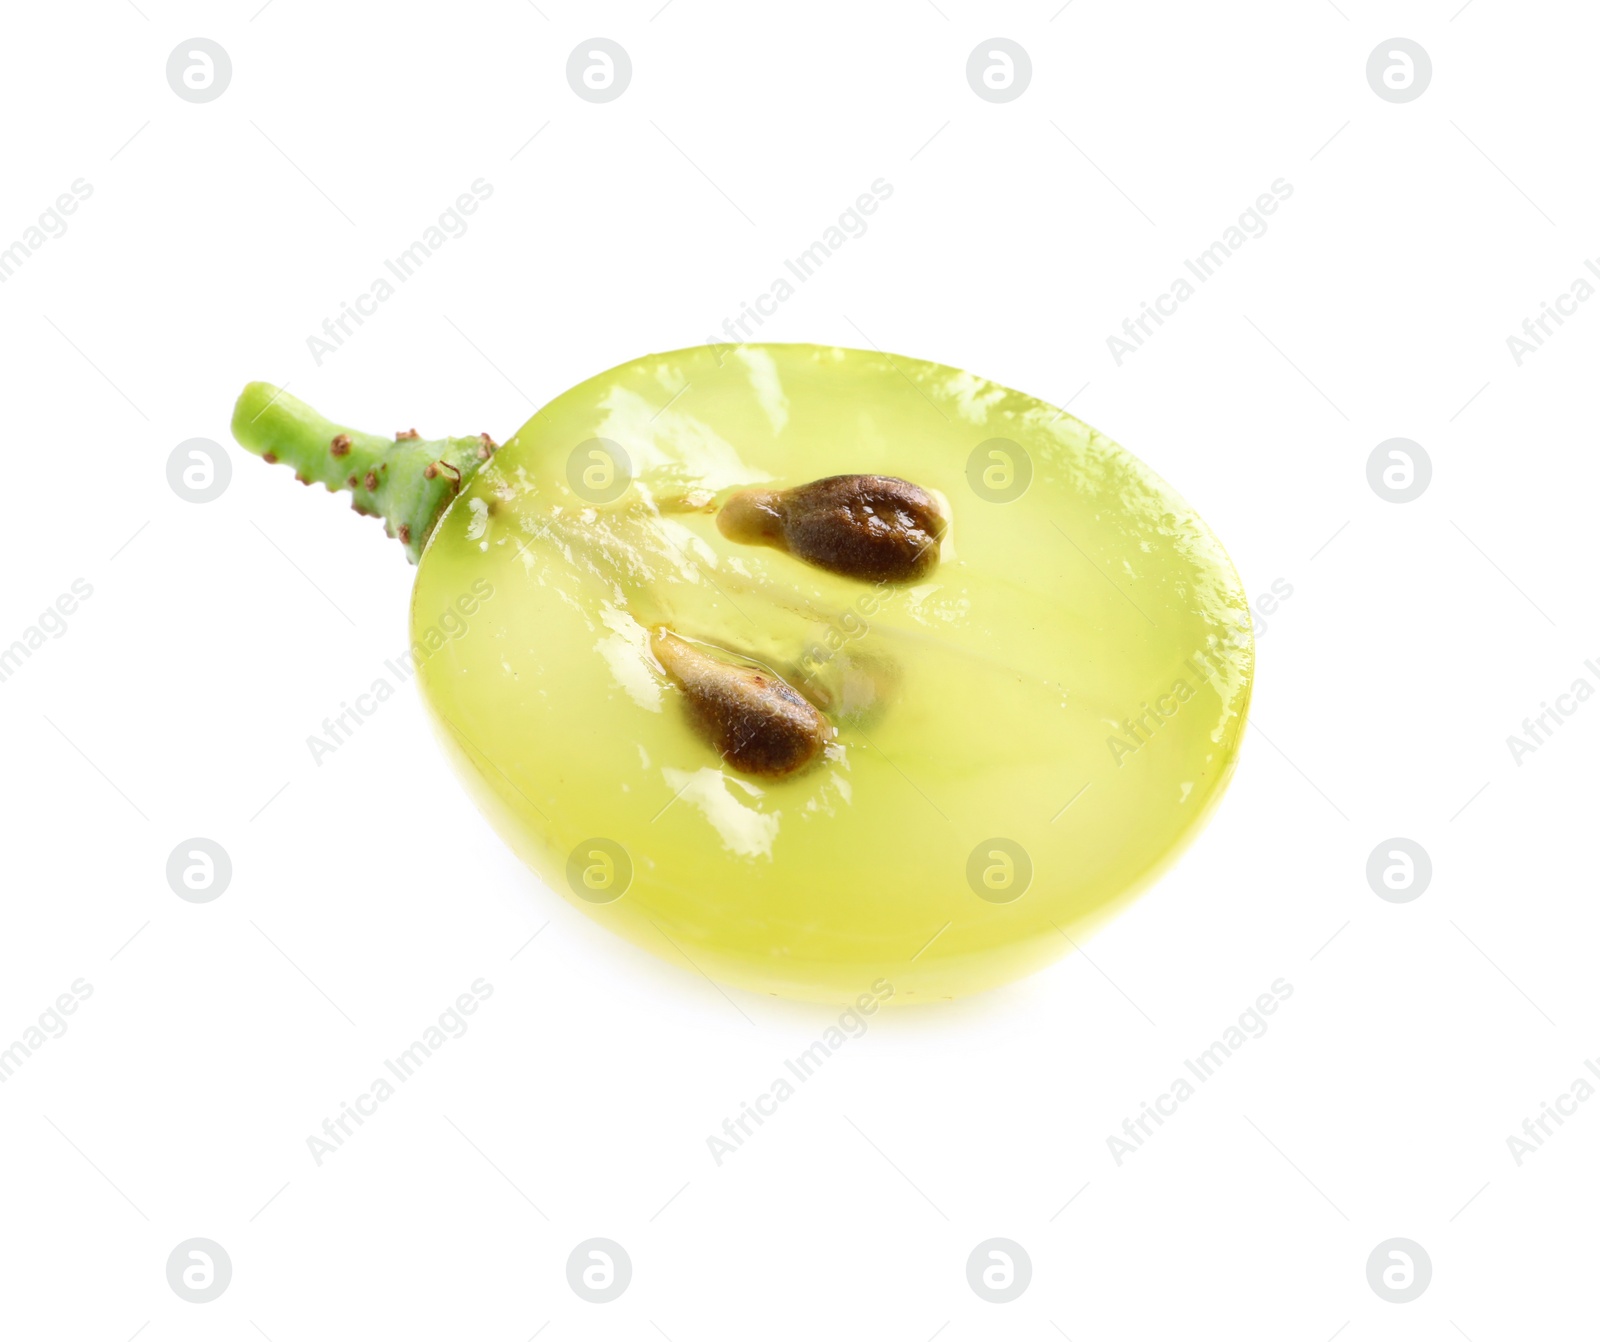 Photo of Cut fresh ripe juicy green grape on white background